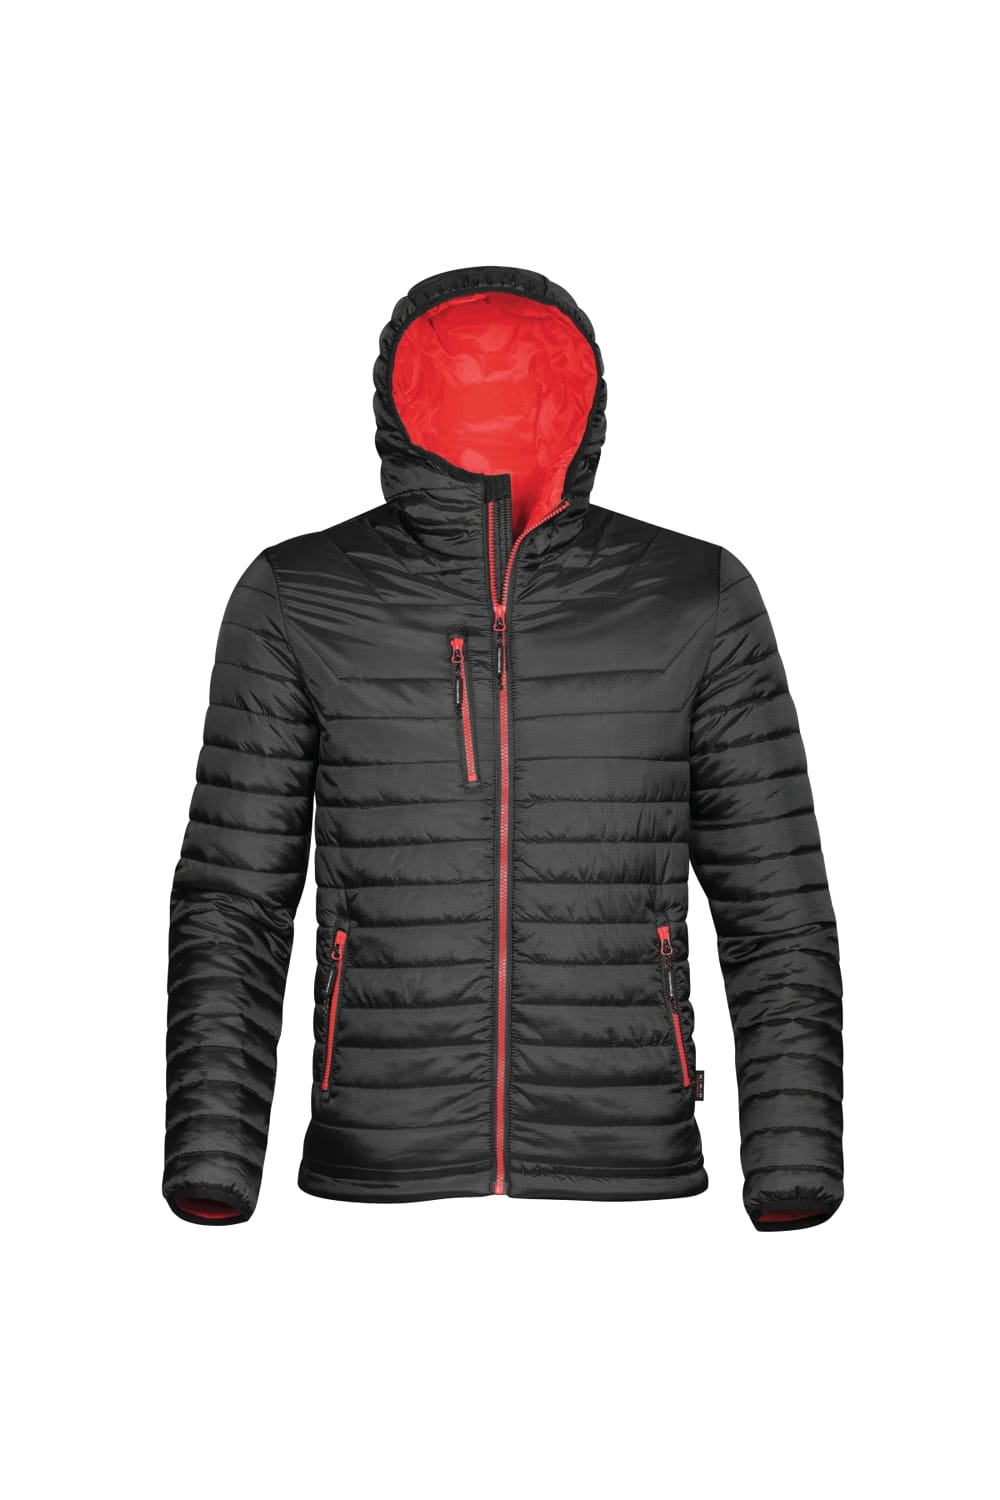 Stormtech Mens Gravity Hooded Thermal Winter Jacket (Durable Water Resistant) (Black/True Red)